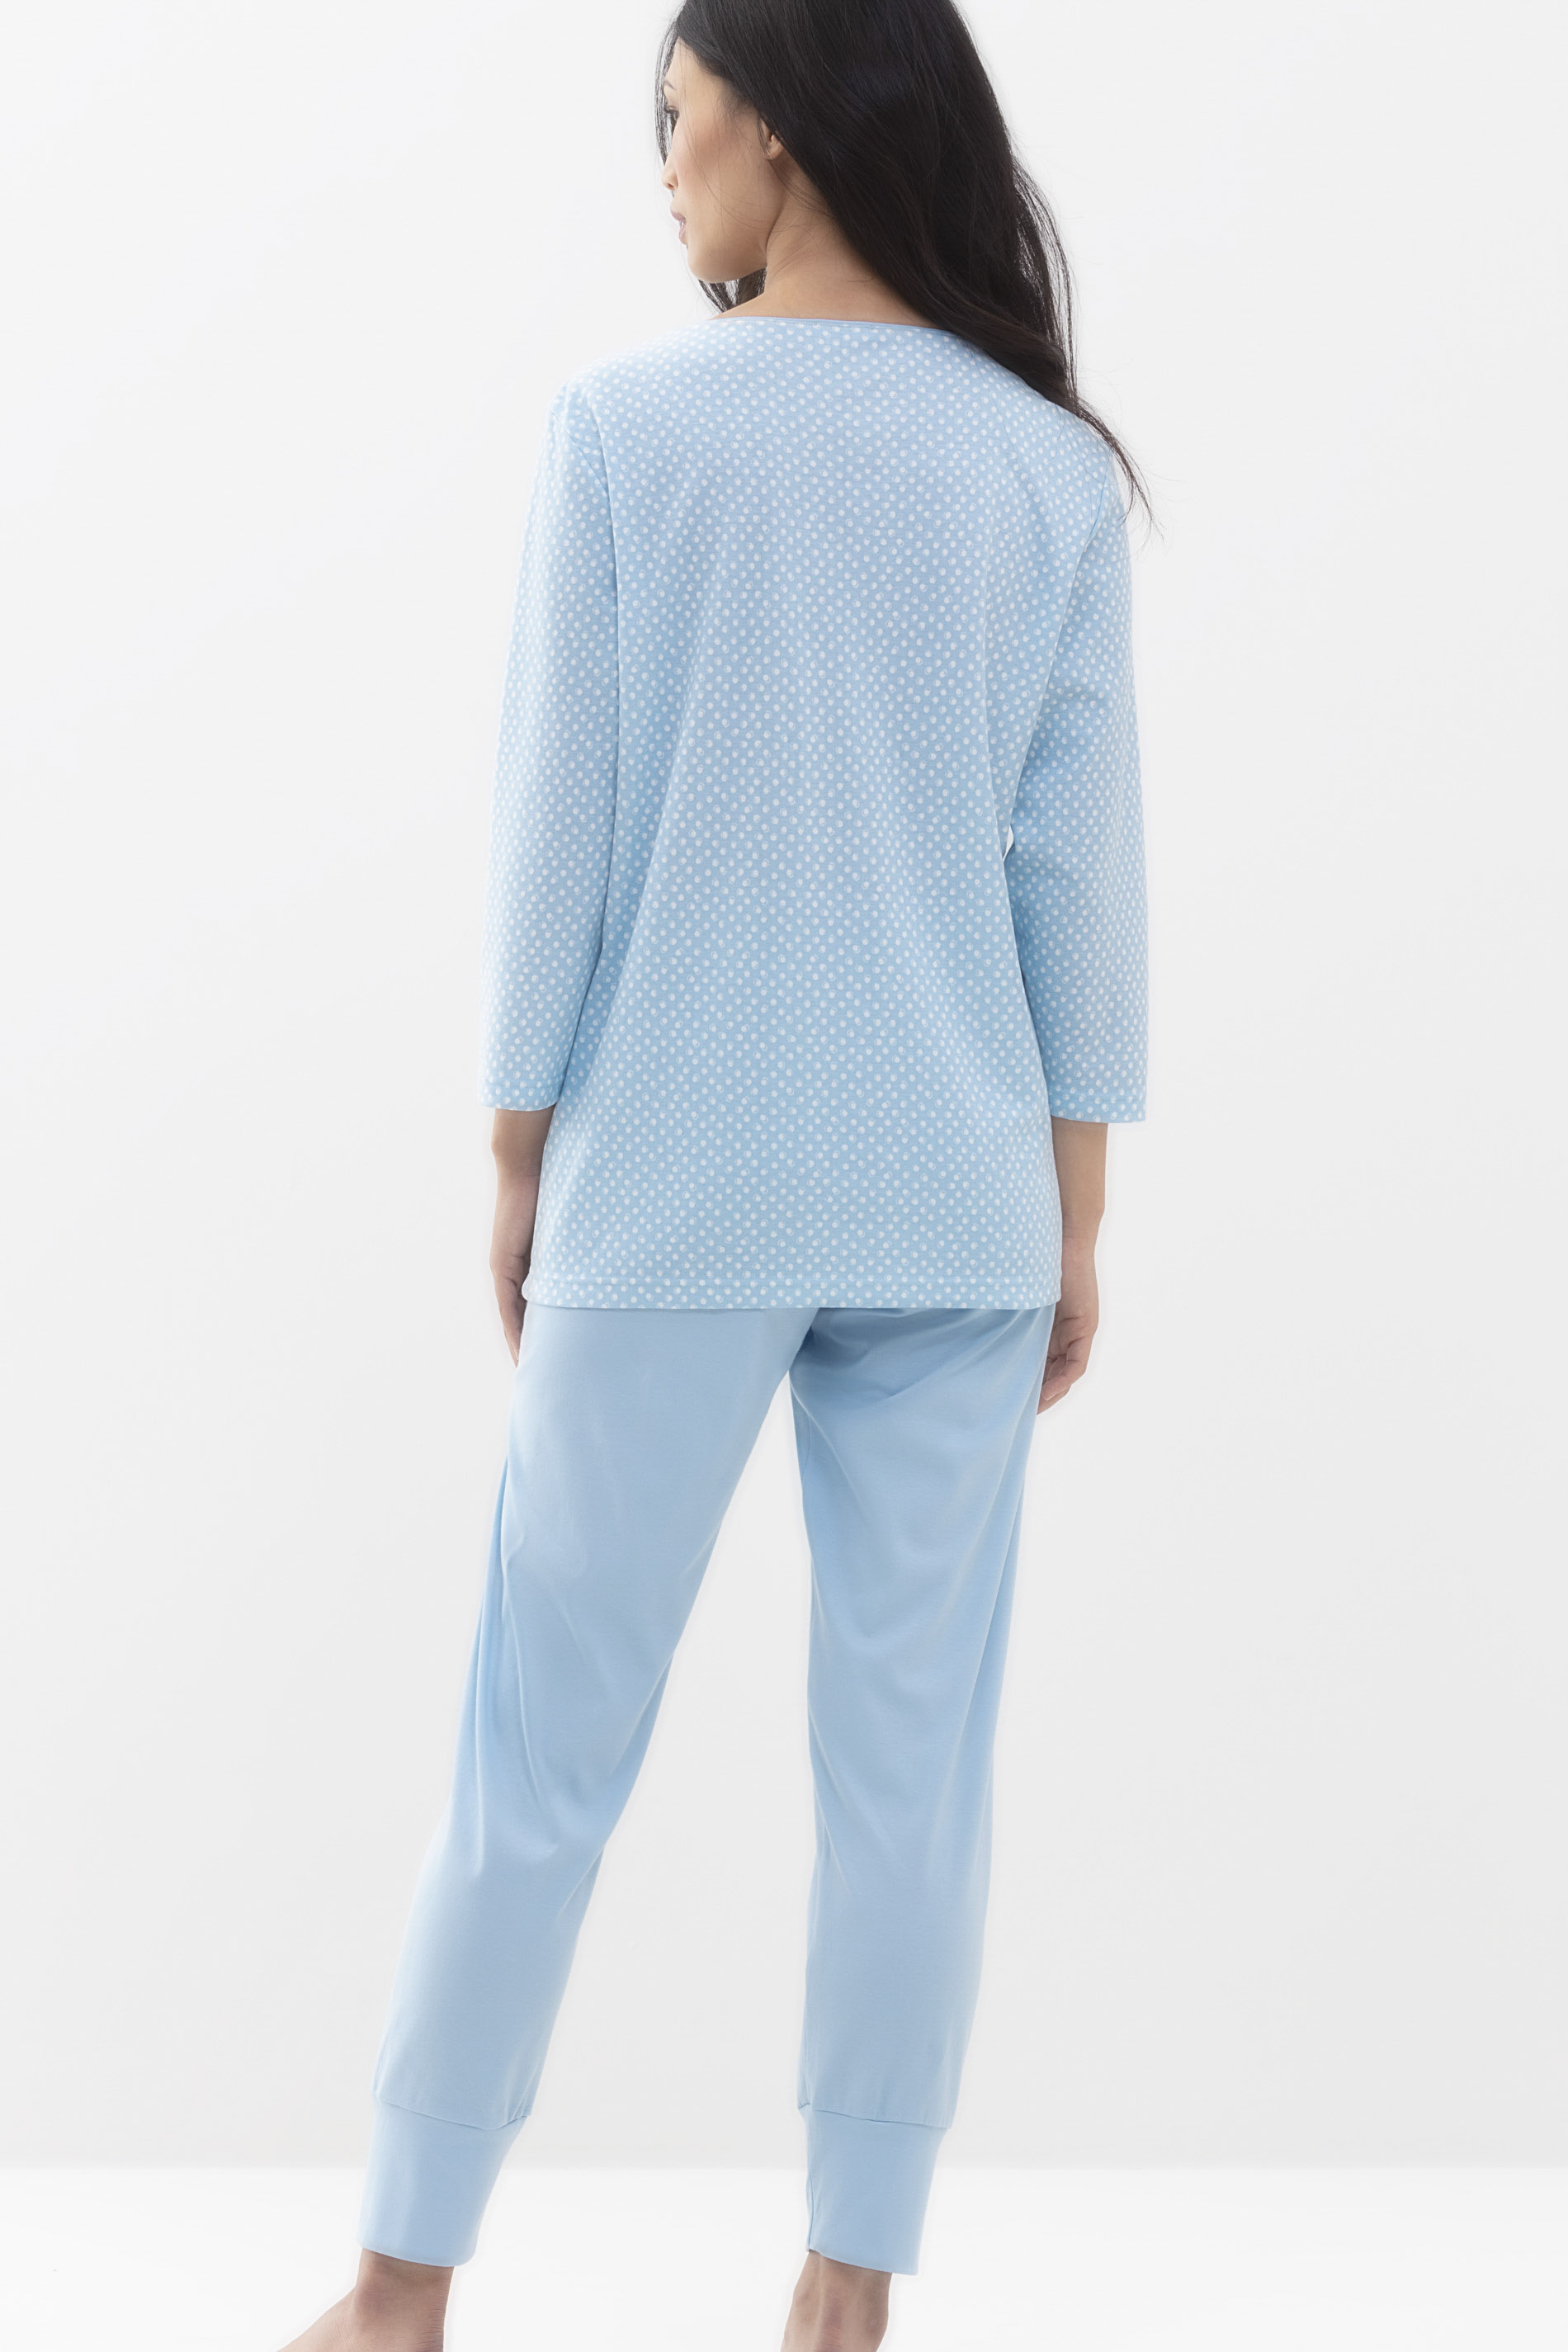 Cropped pyjamas Dream Blue Serie Emelie Rear View | mey®